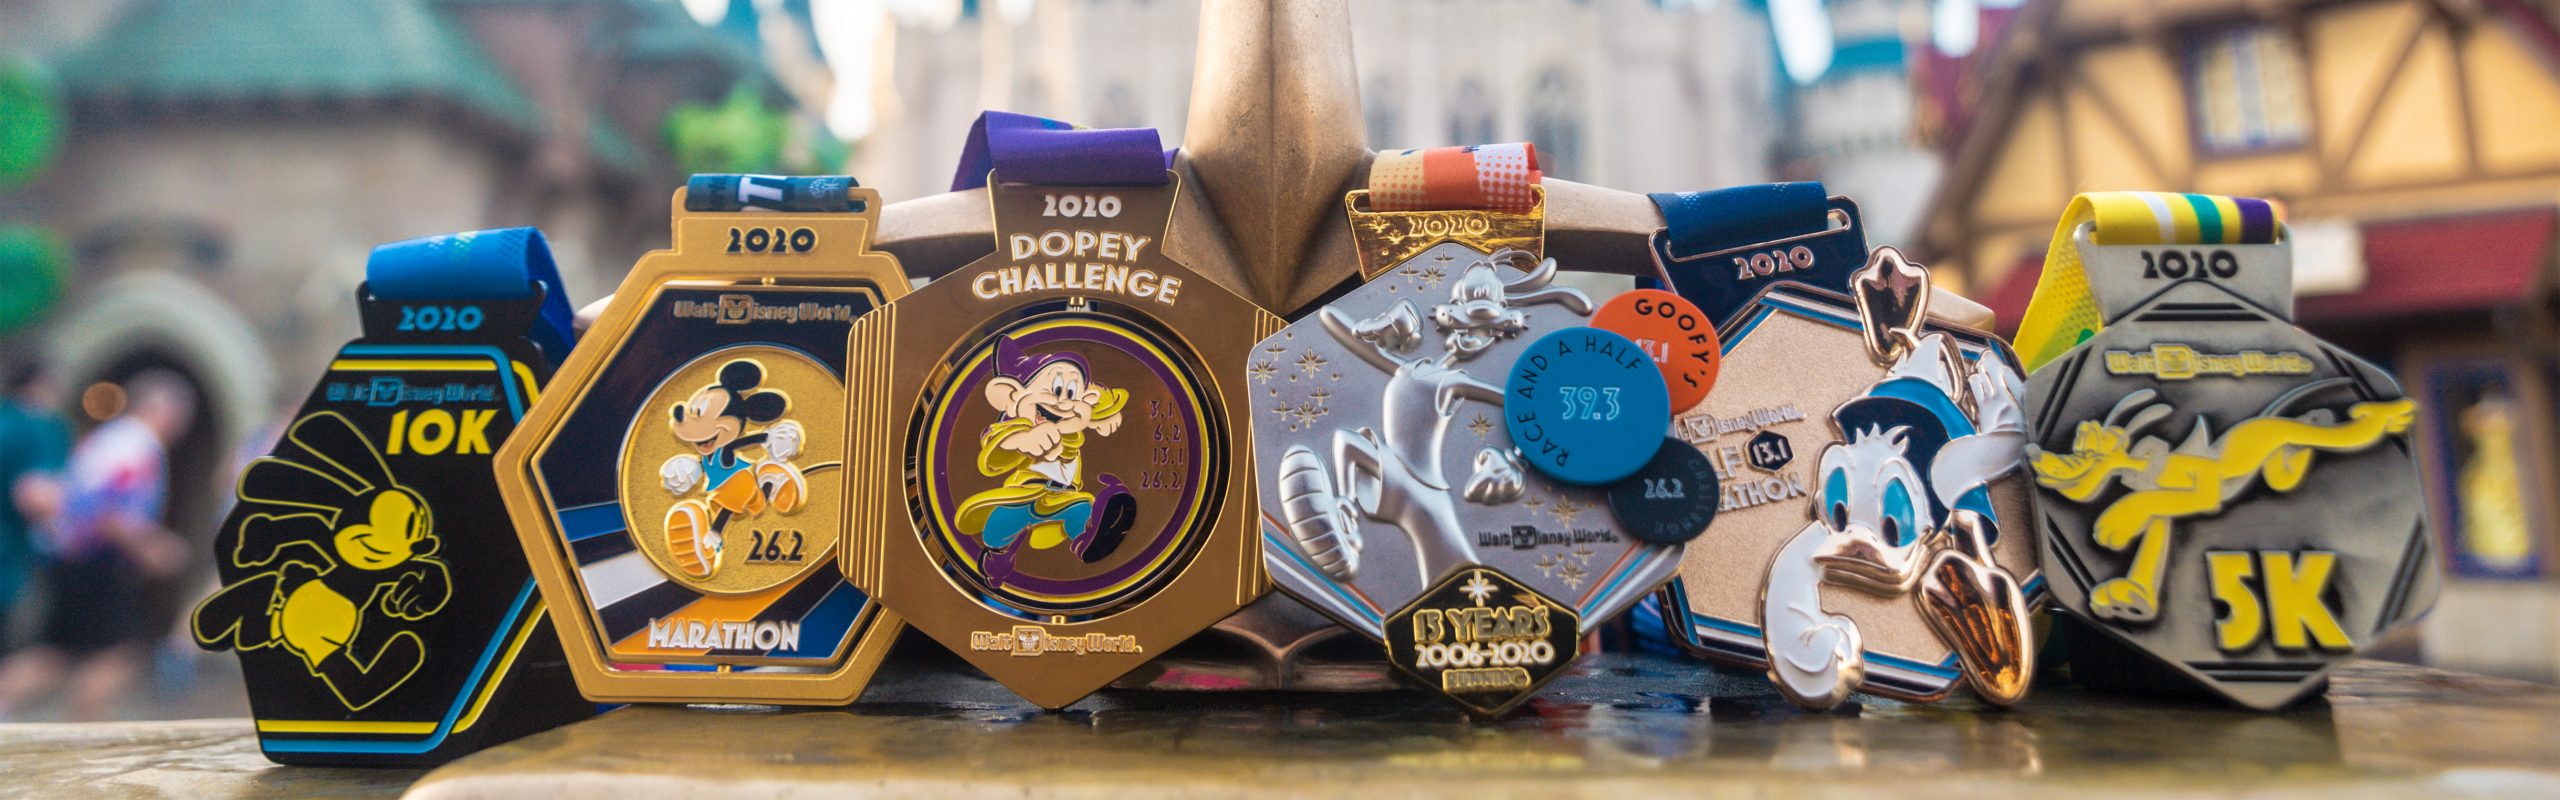 2021 Walt Disney World Marathon Registration Pushed Back